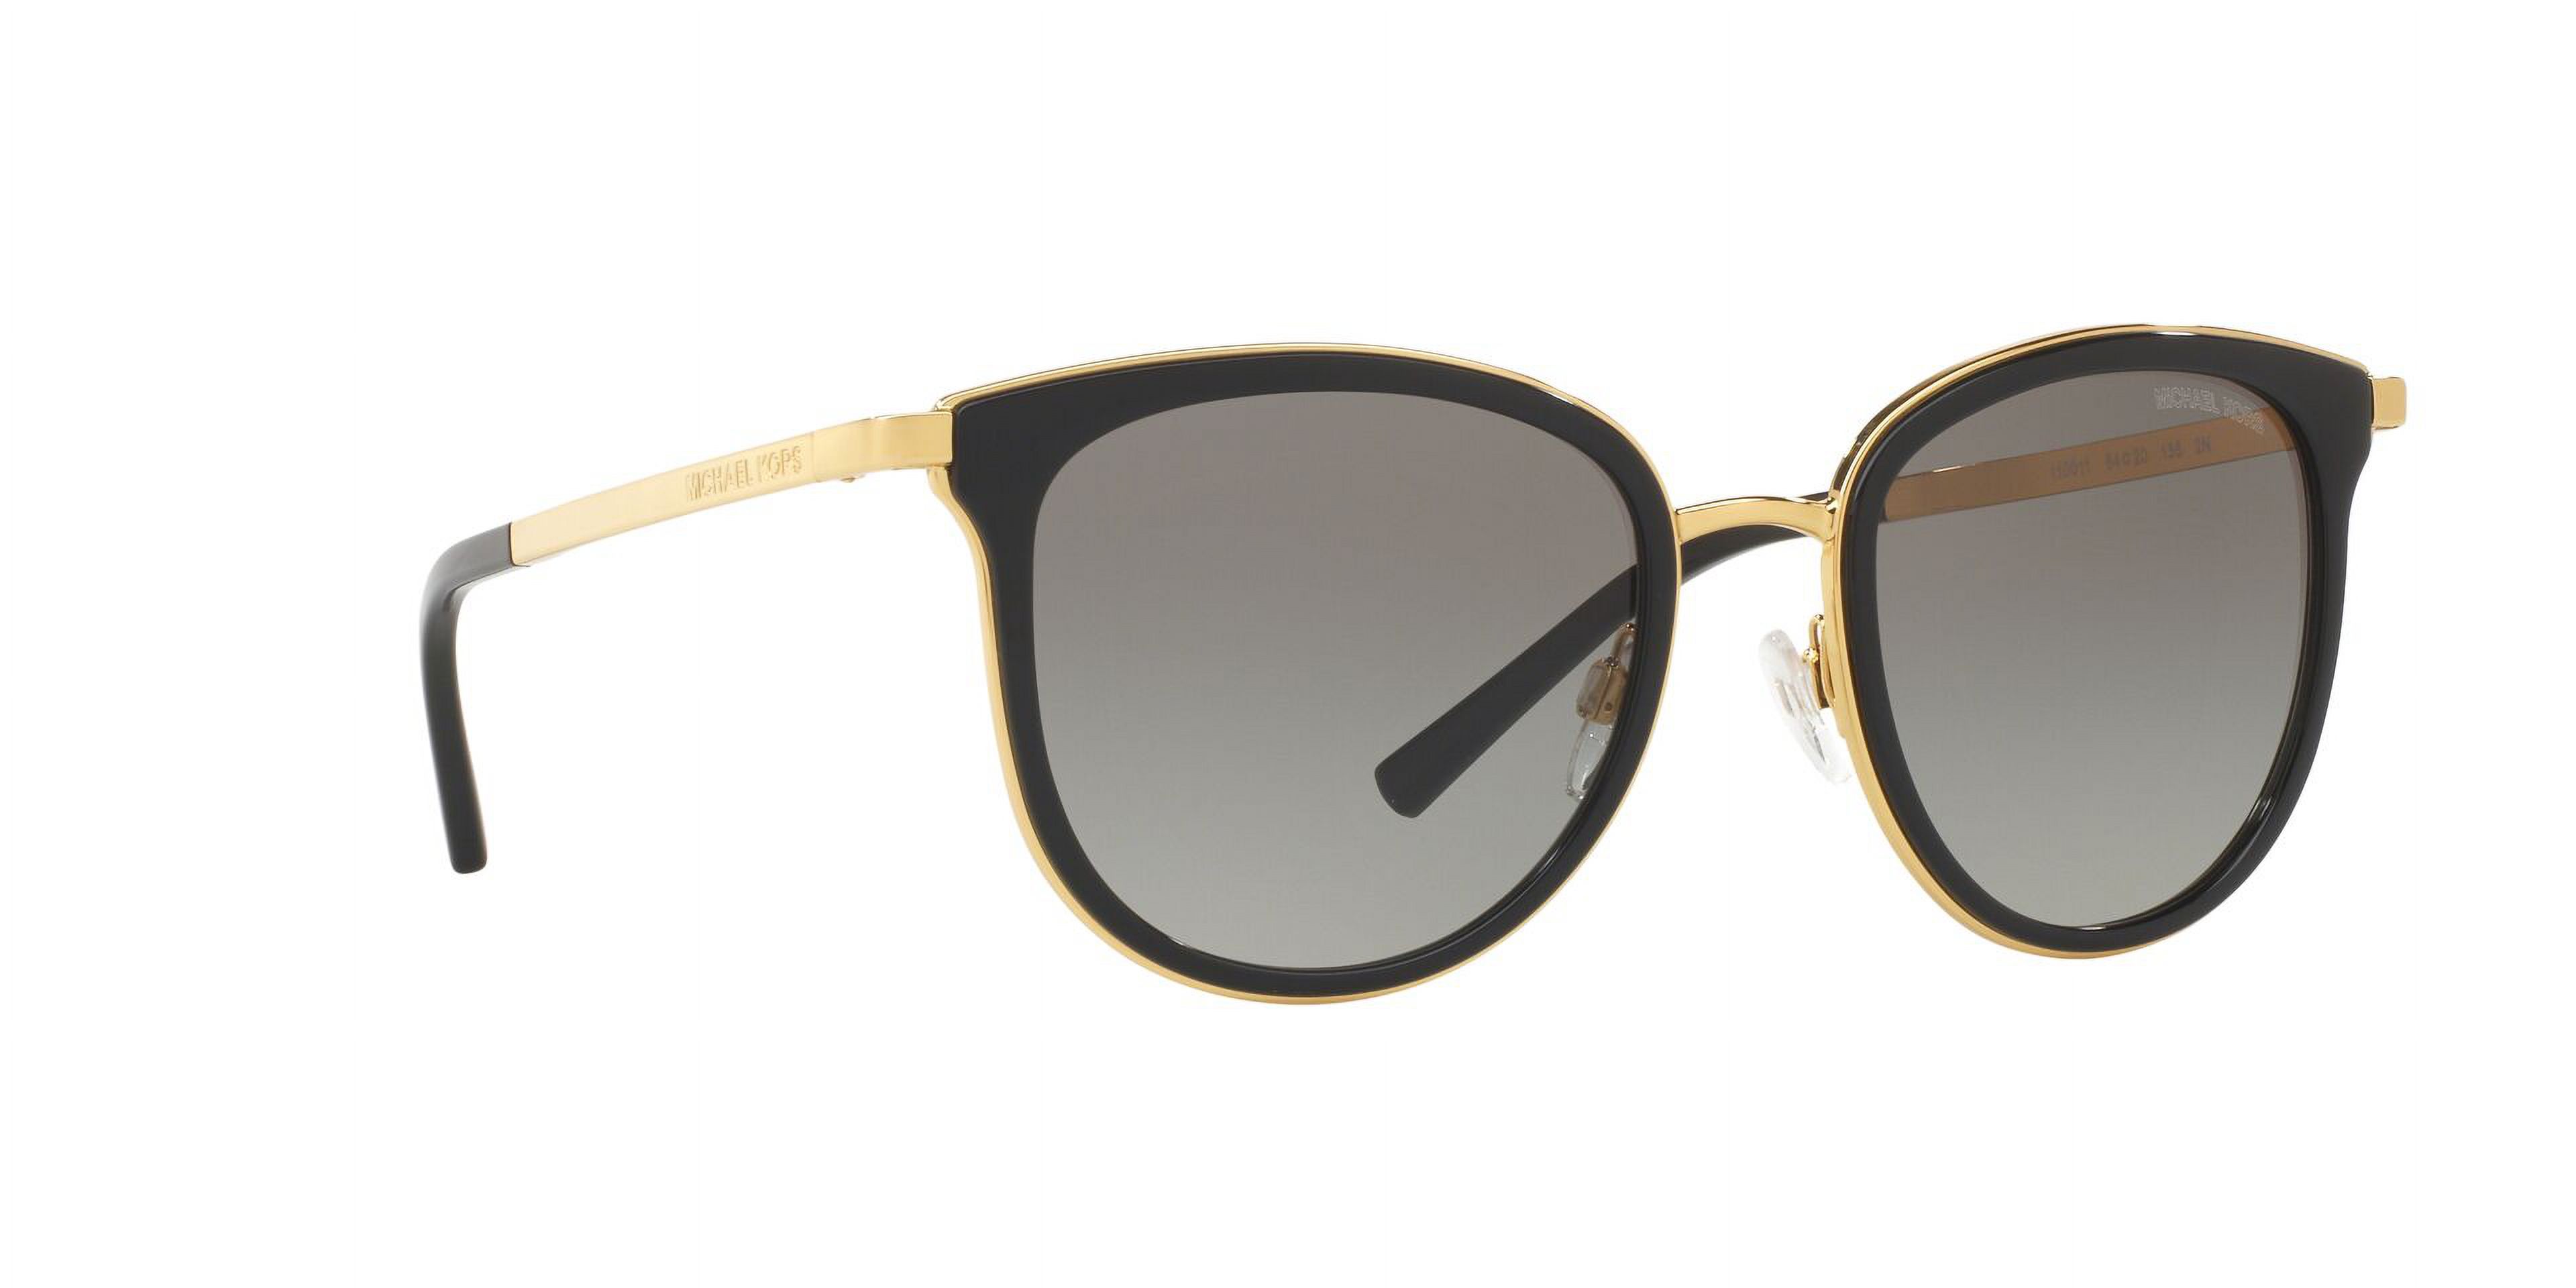 Sunglasses Michael Kors MK 1010 110011 Black/Gold - image 2 of 3